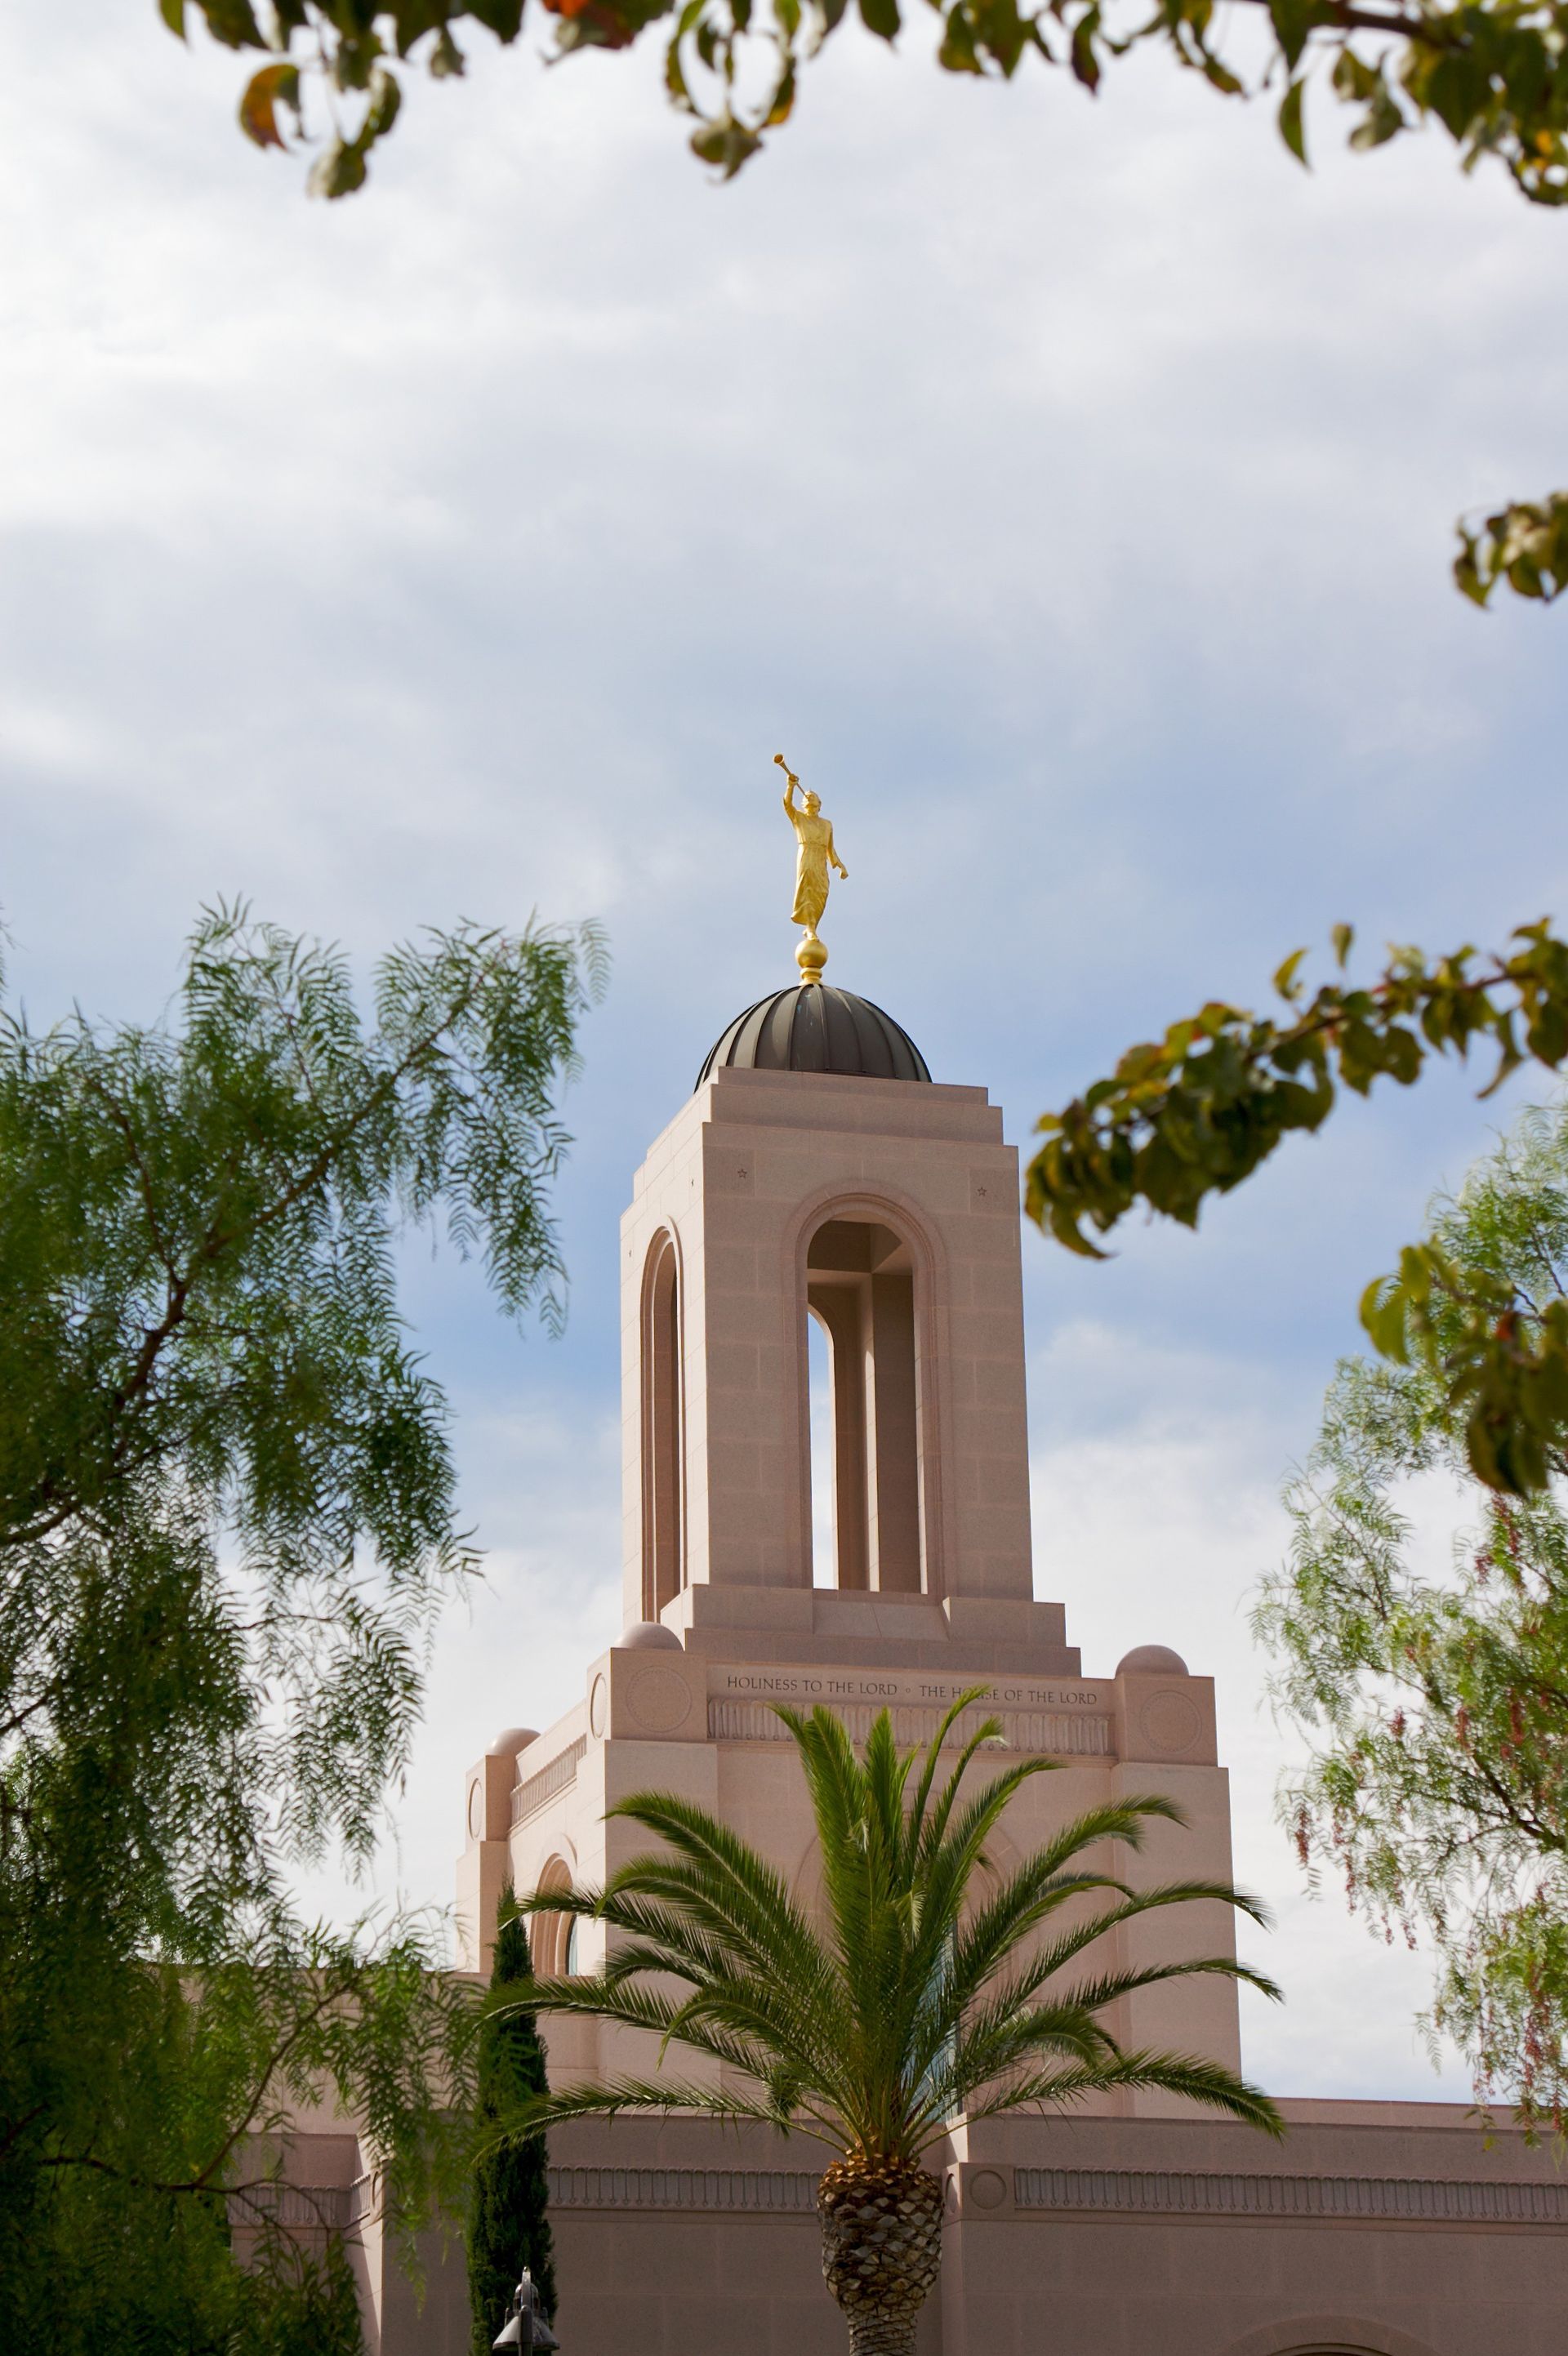 The Newport Beach California Temple spire, including scenery.